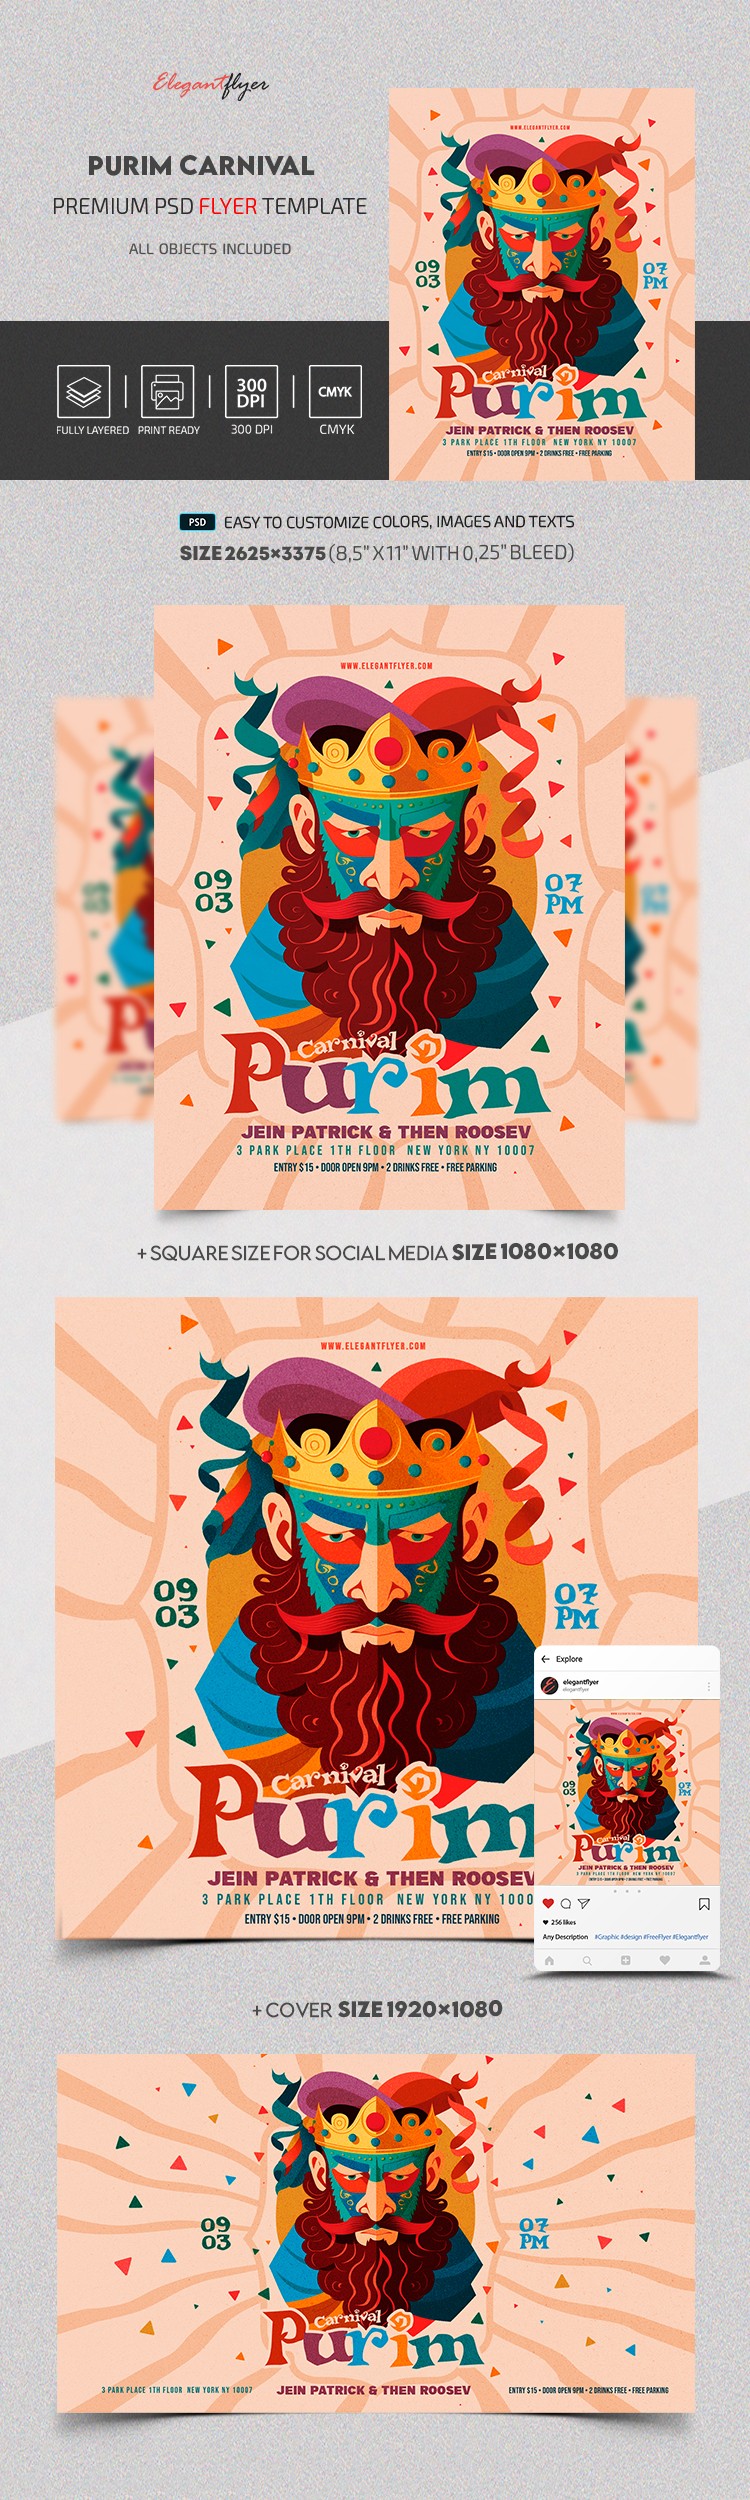 Purim Karneval by ElegantFlyer